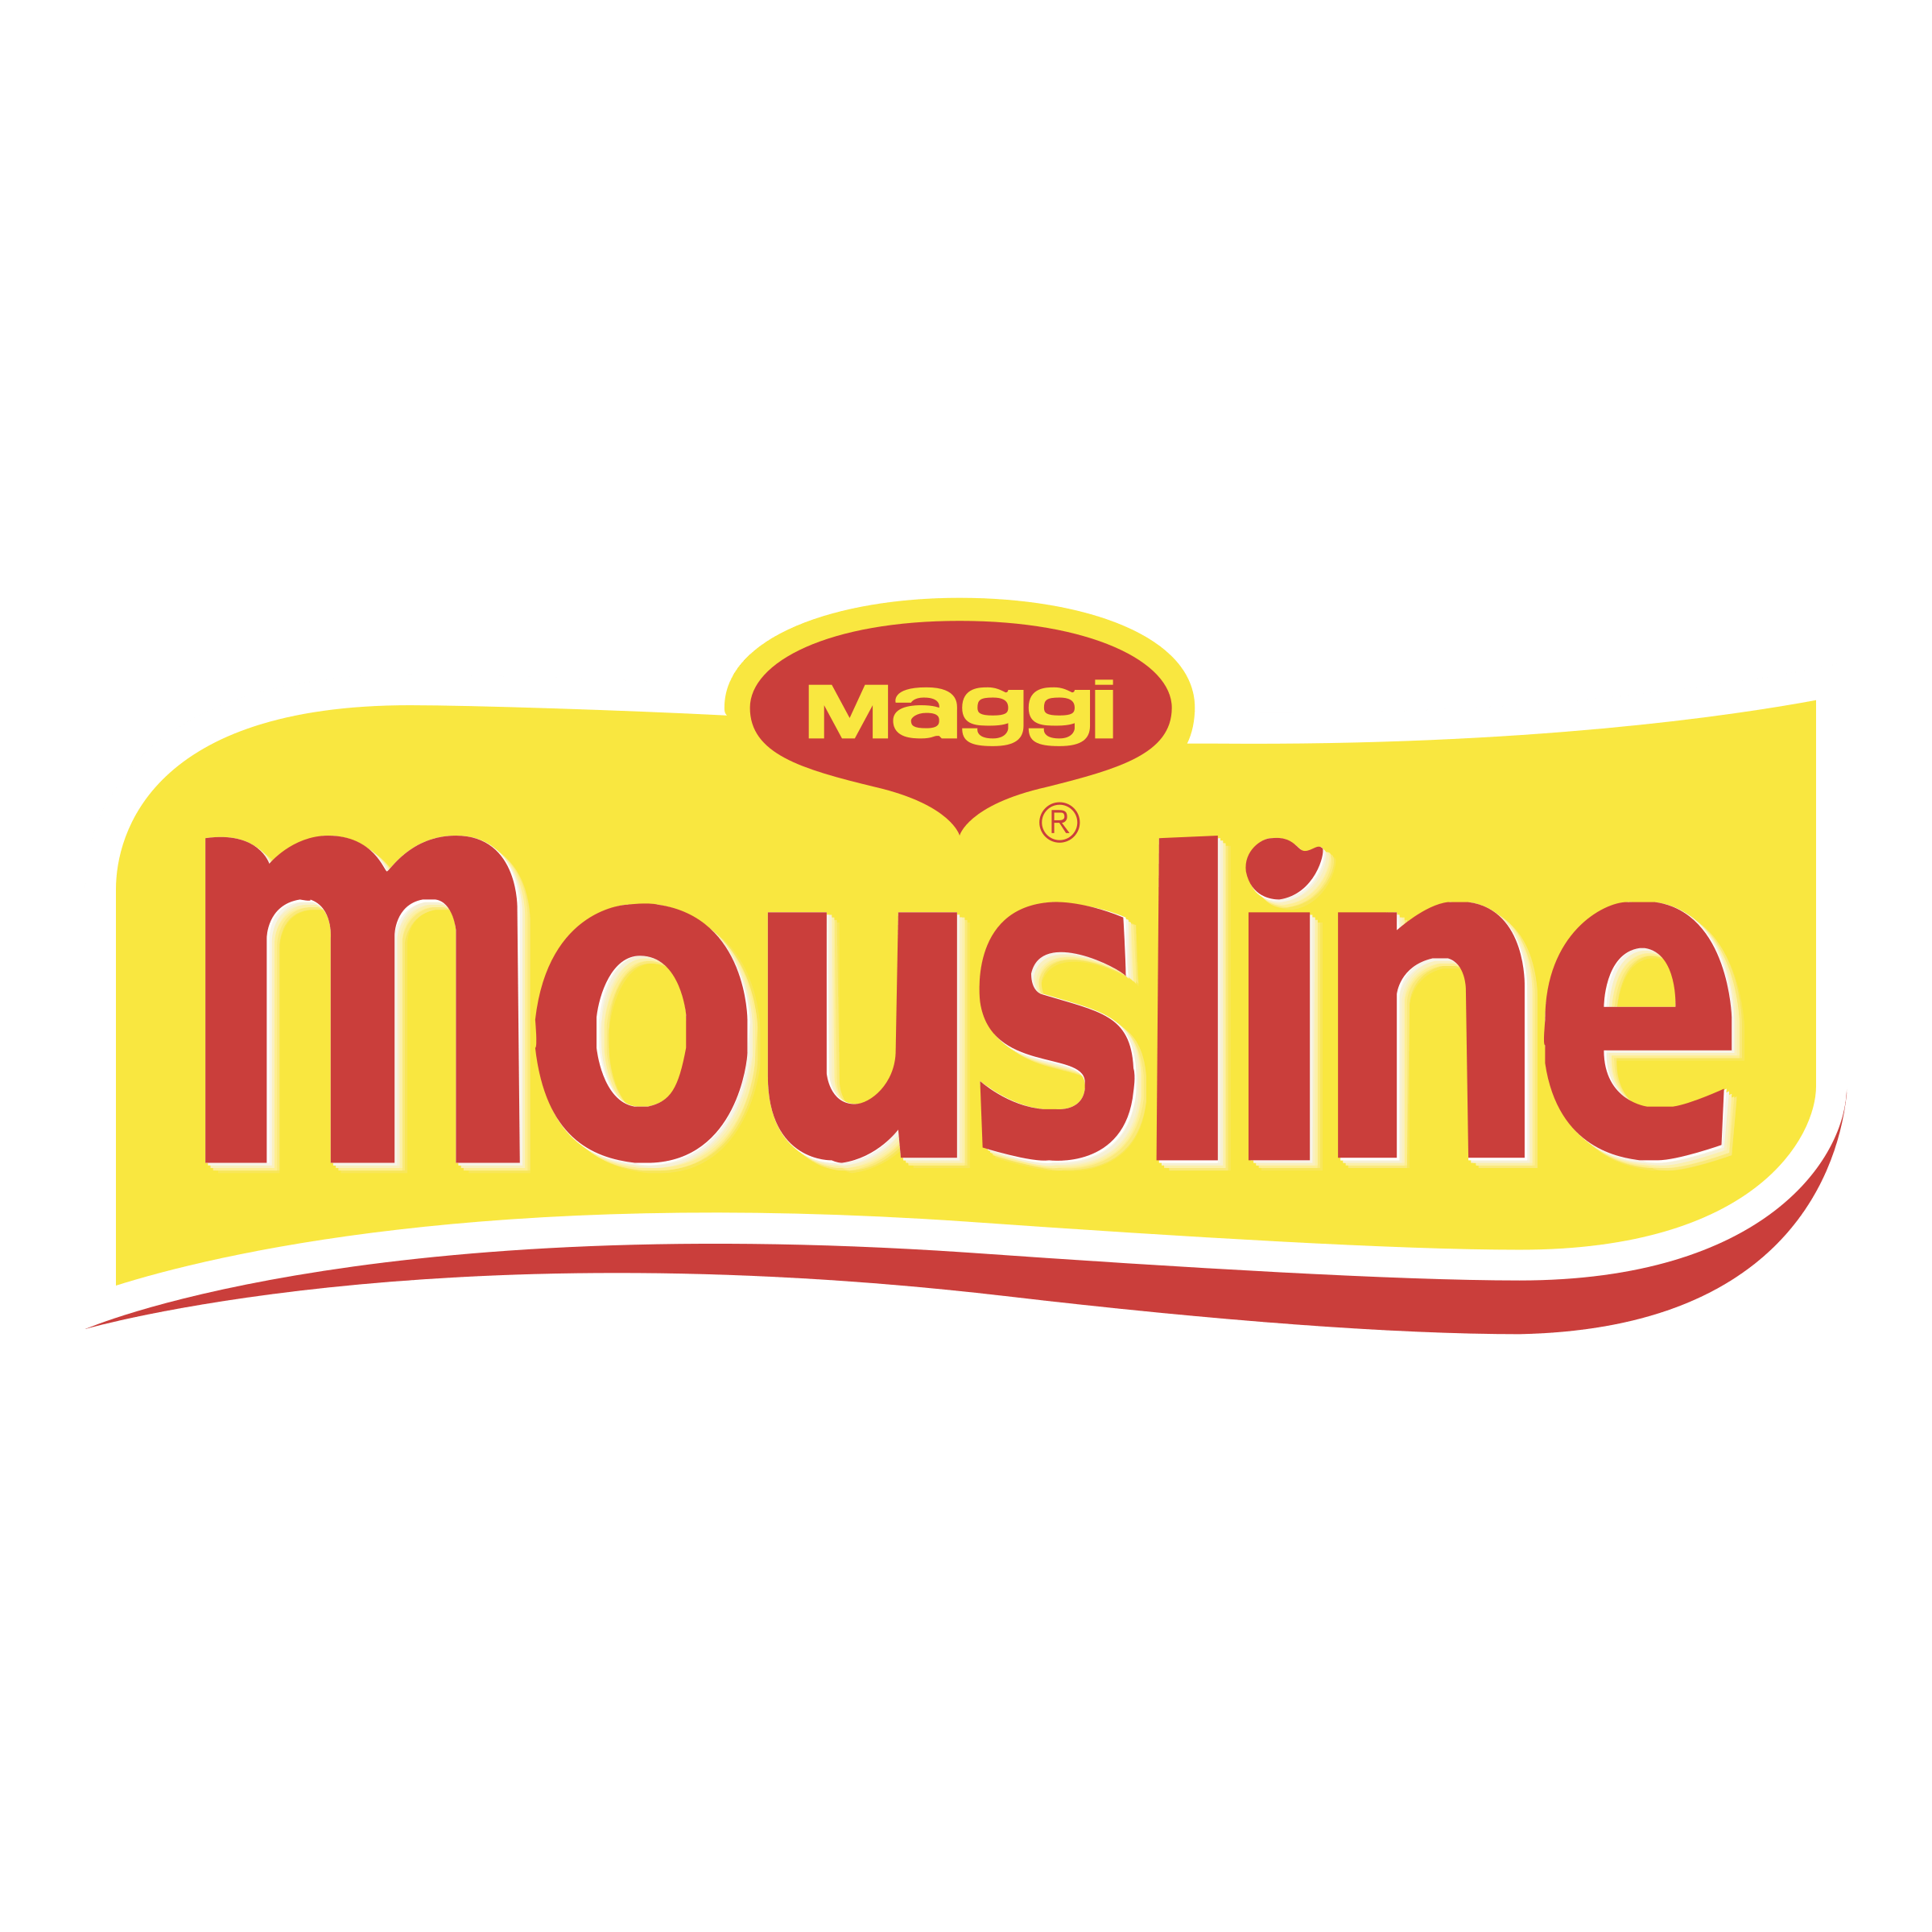 Maggi Logo - Mousline Maggi Logo PNG Transparent & SVG Vector - Freebie Supply